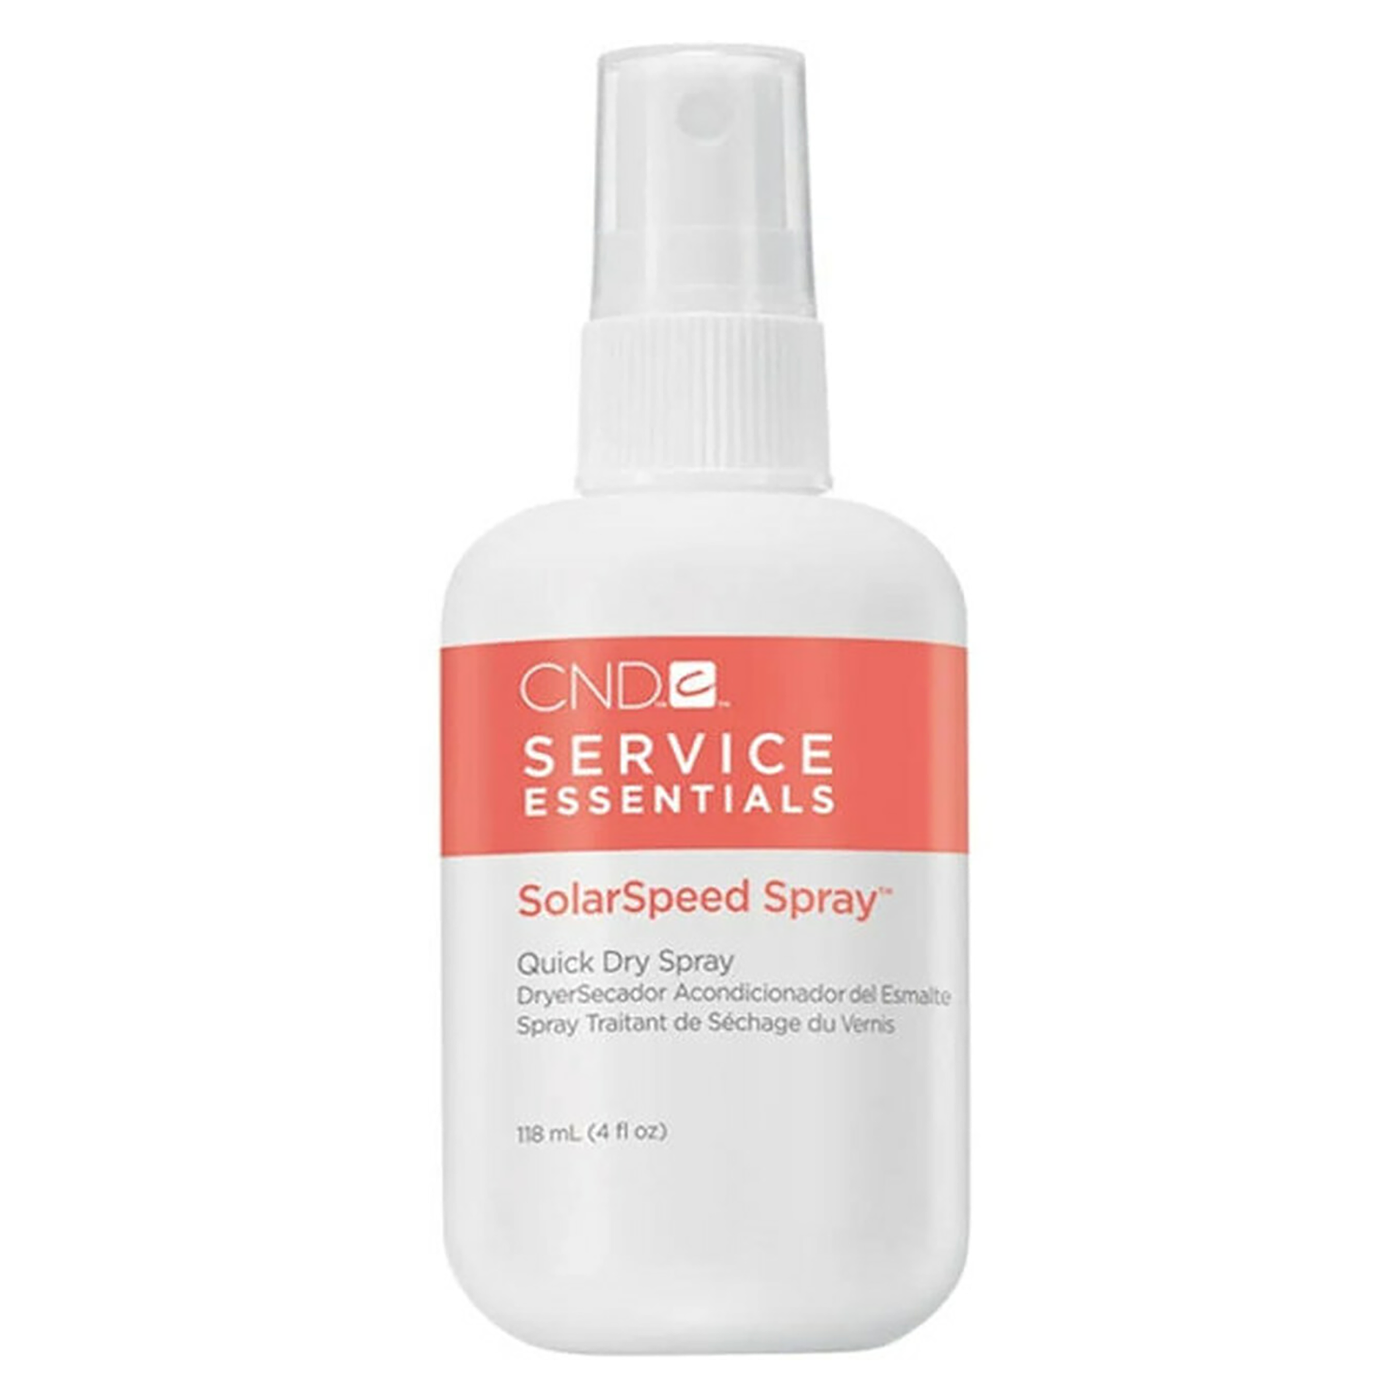 SolarSpeed Spray™ Quick Dry Spray